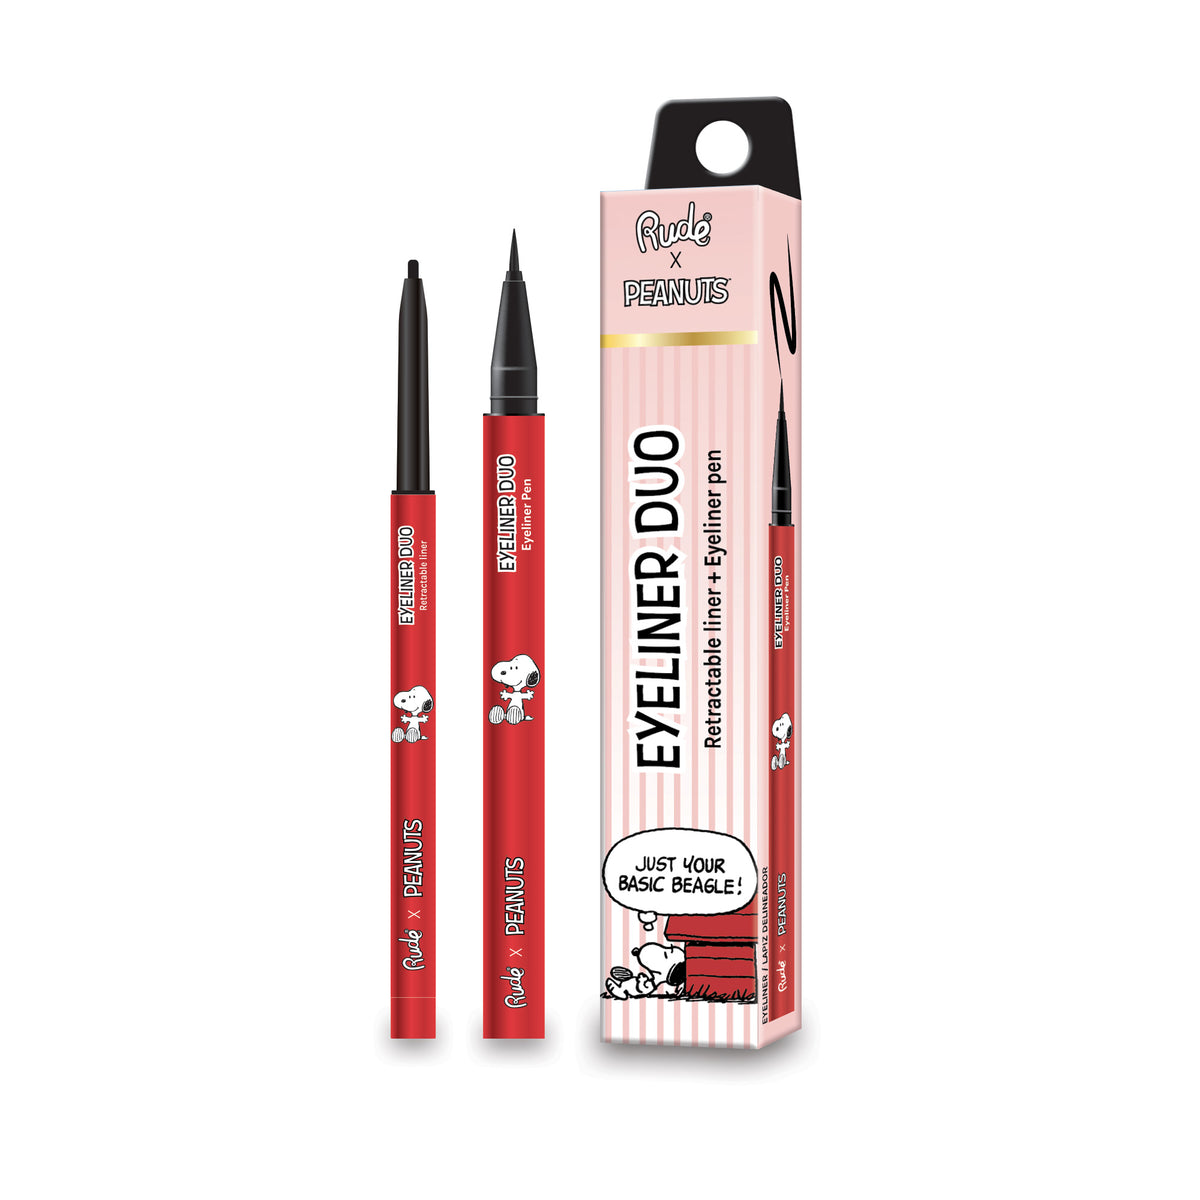 Peanuts Eyeliner Duo - Retractable Liner + Eyeliner Pen